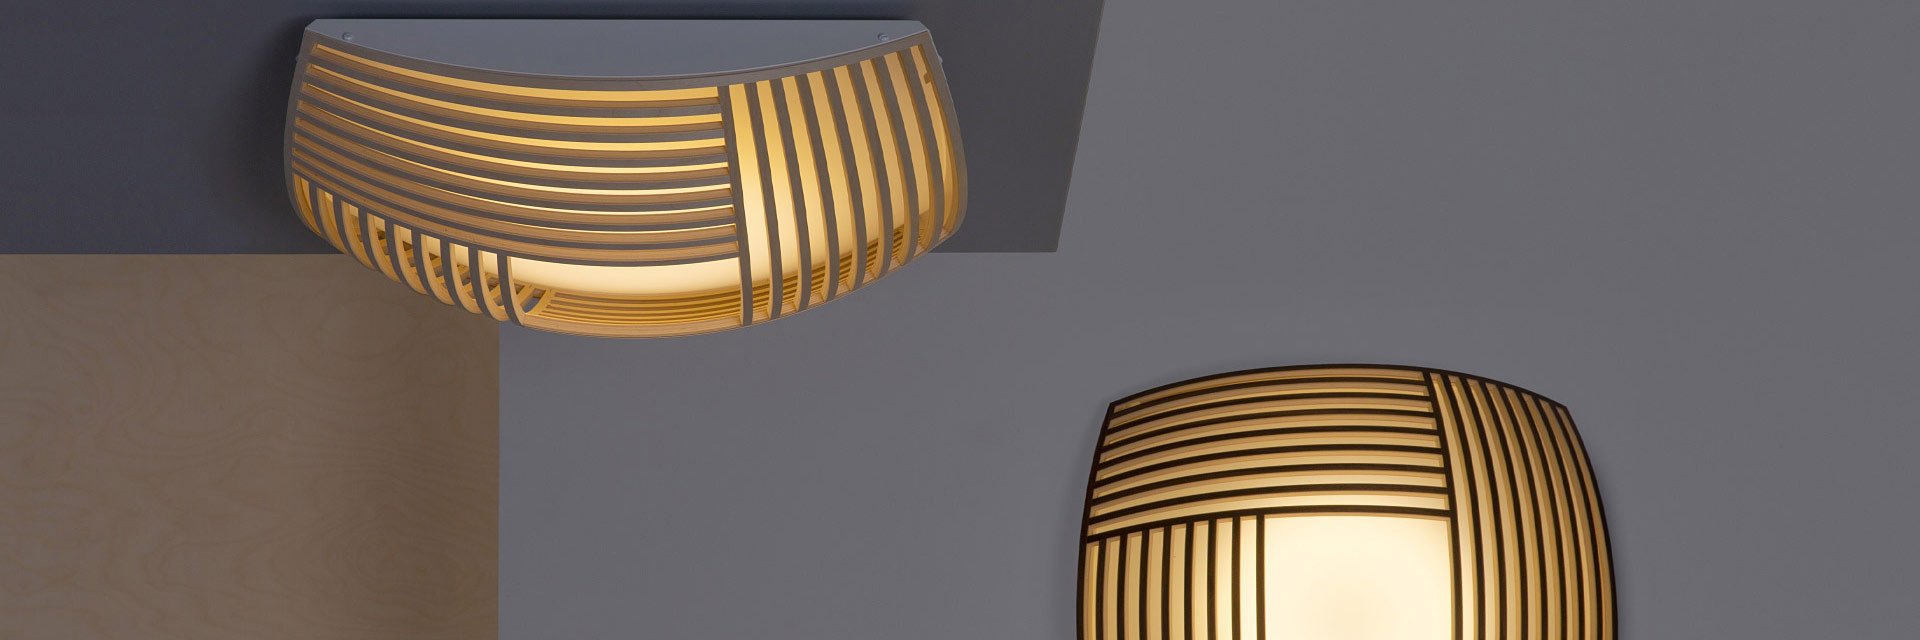 Plafonnier design scandinave - Luminaires style danois